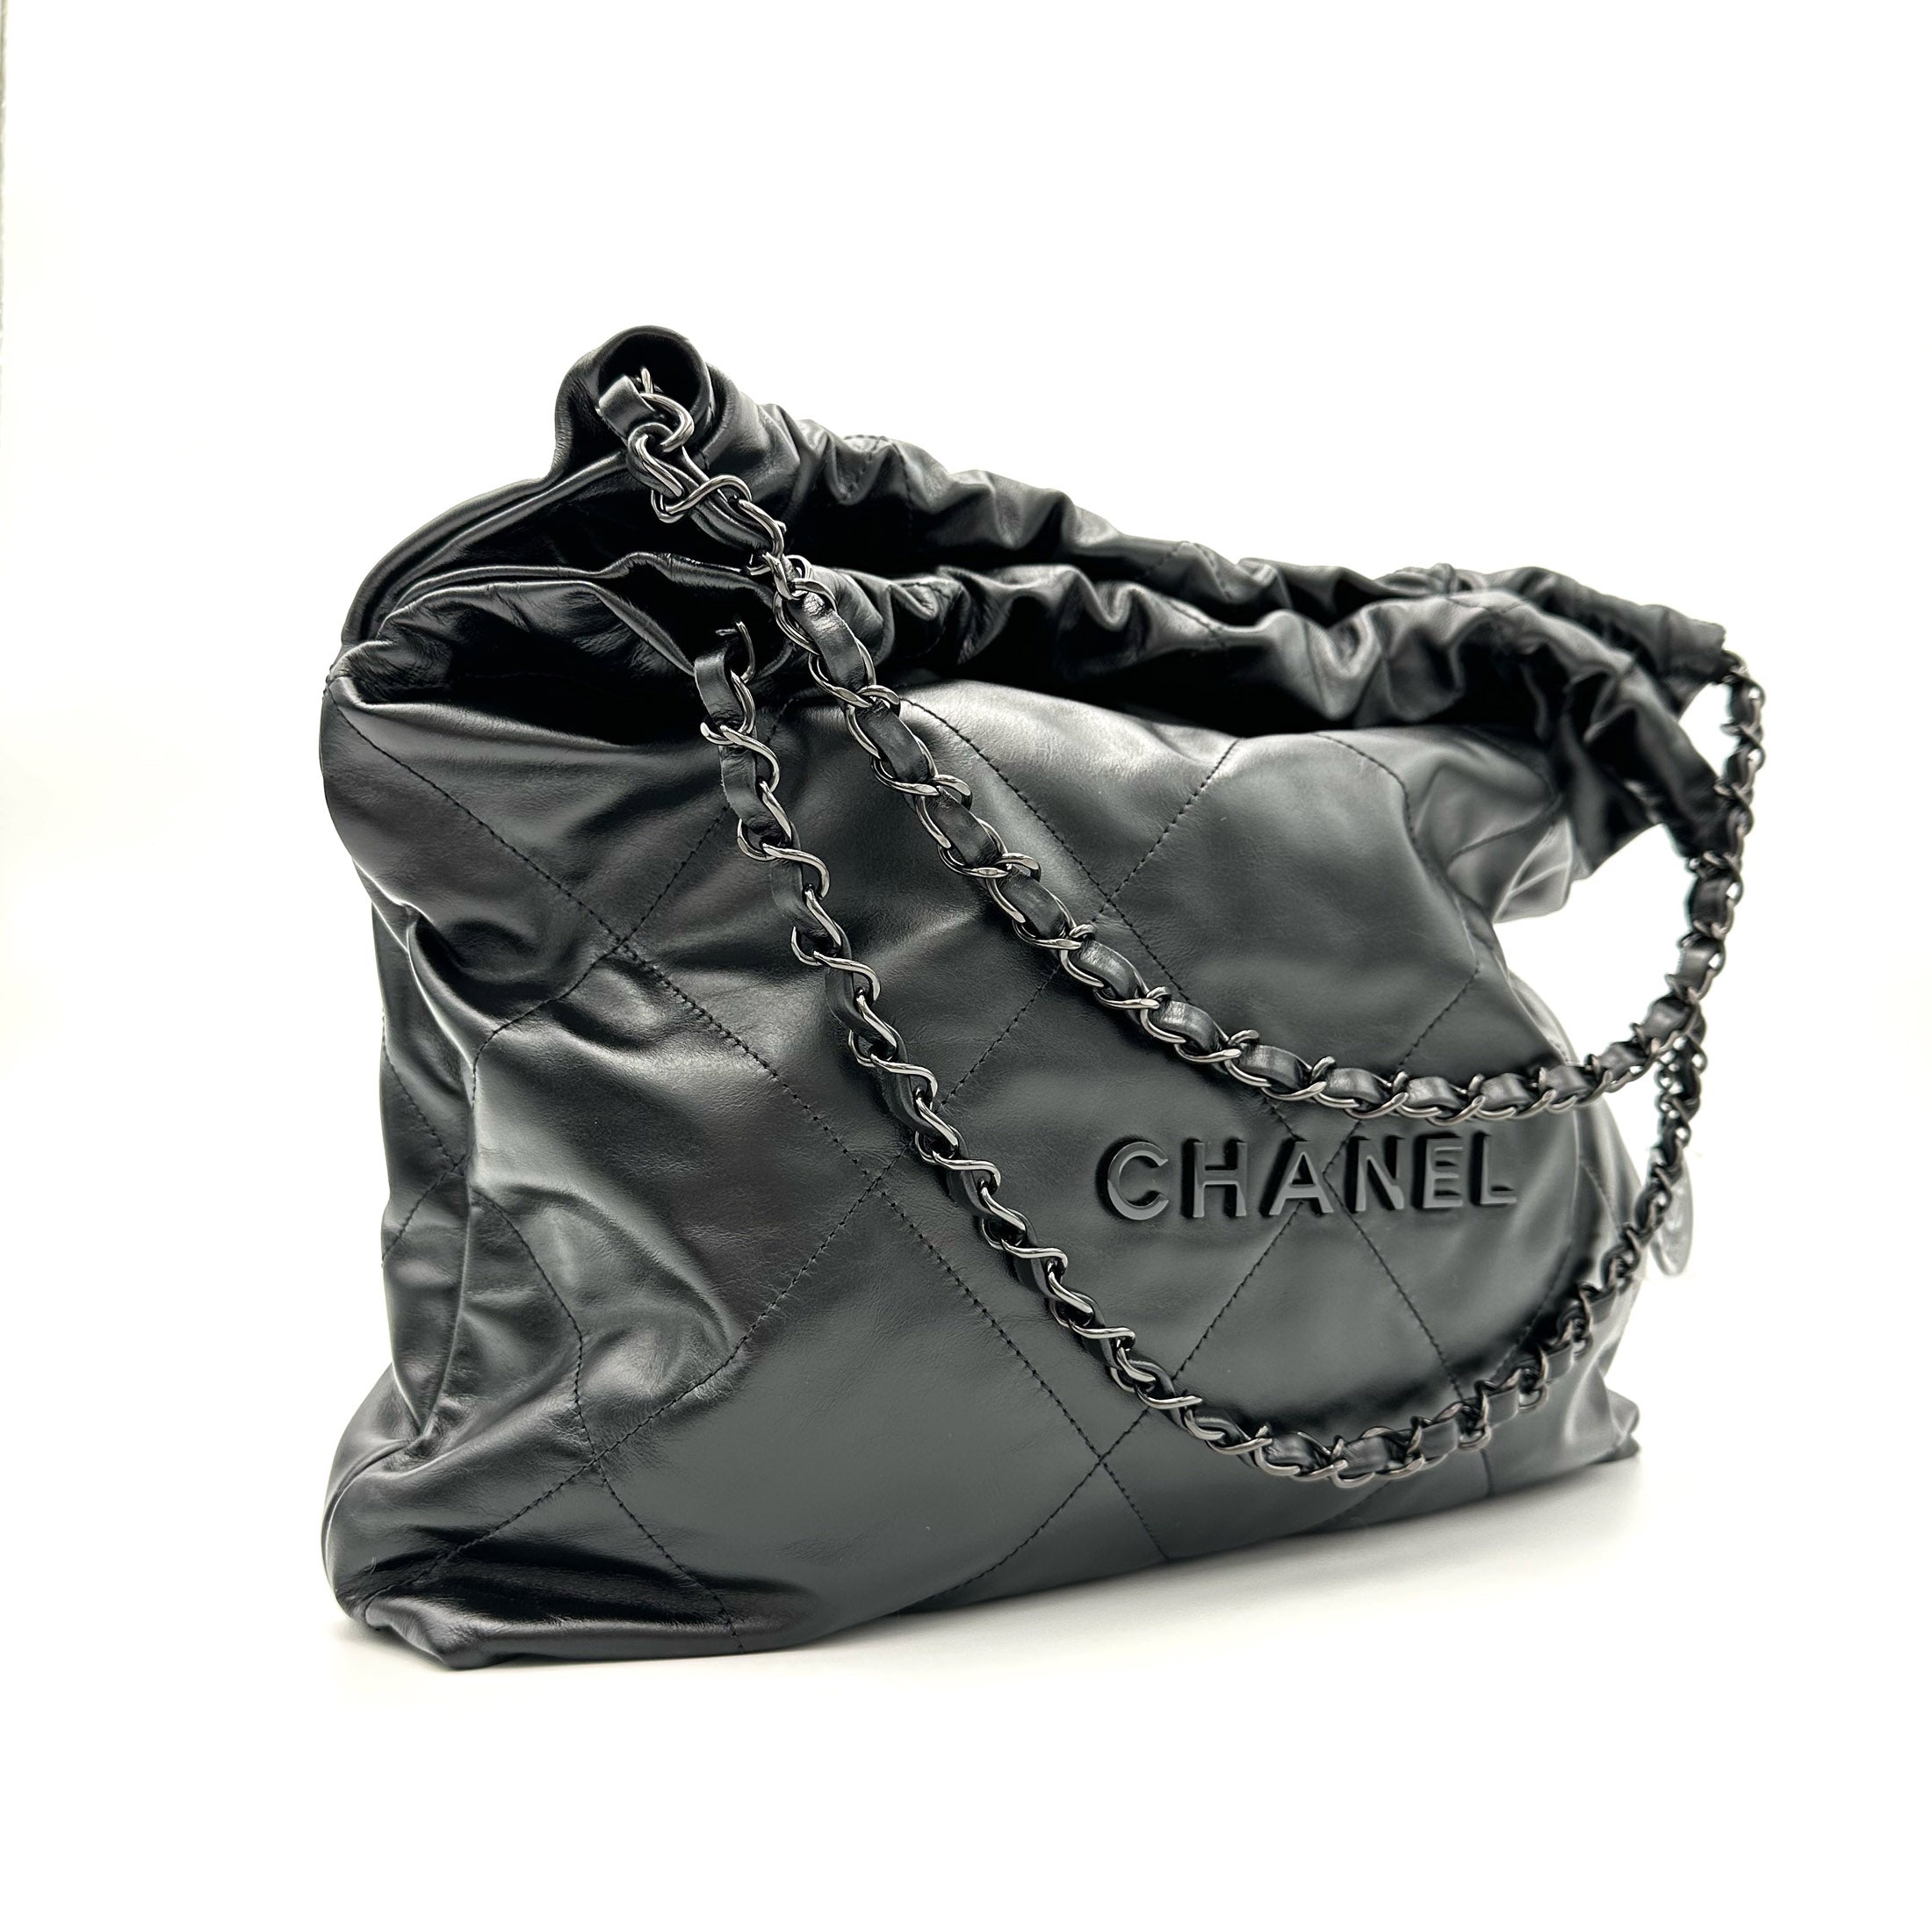 Chanel 22 Medium (SO Black) - Brand New